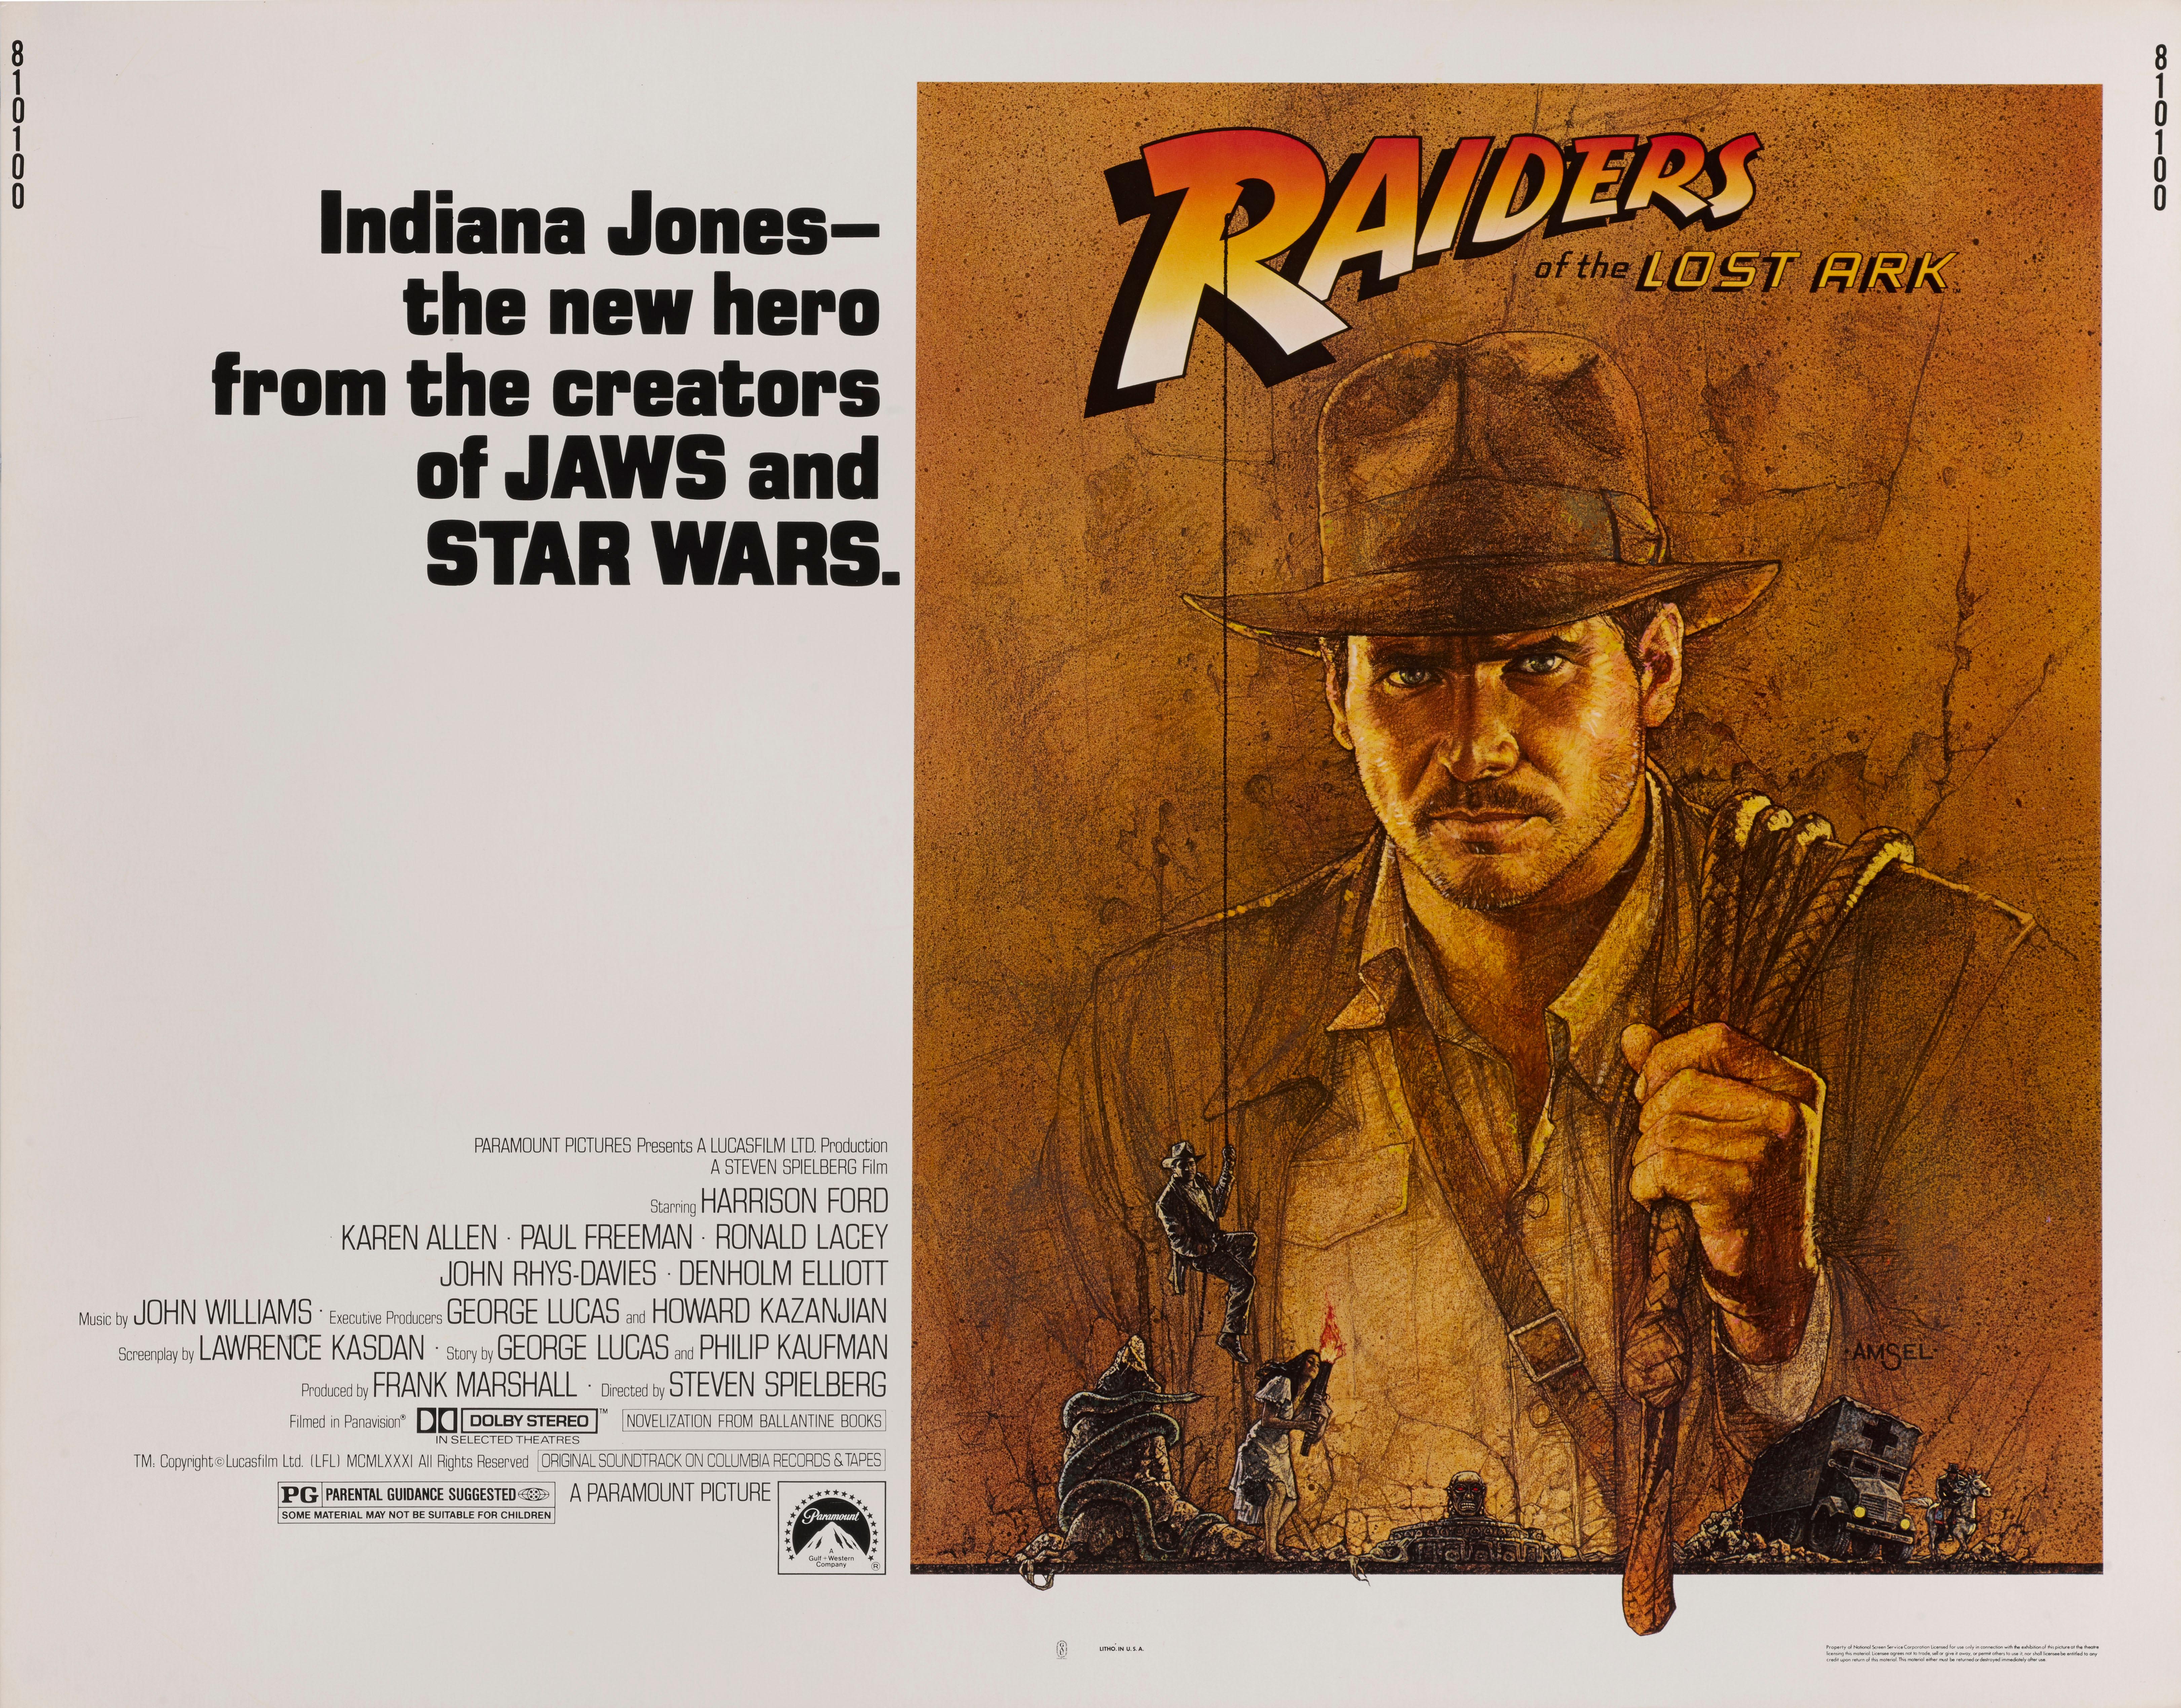 Original American movie poster for Steven Spielberg's 1981 Blockbuster adventure film starring Harrison Ford. The artwork is by Richard Amsel (1947-1985).